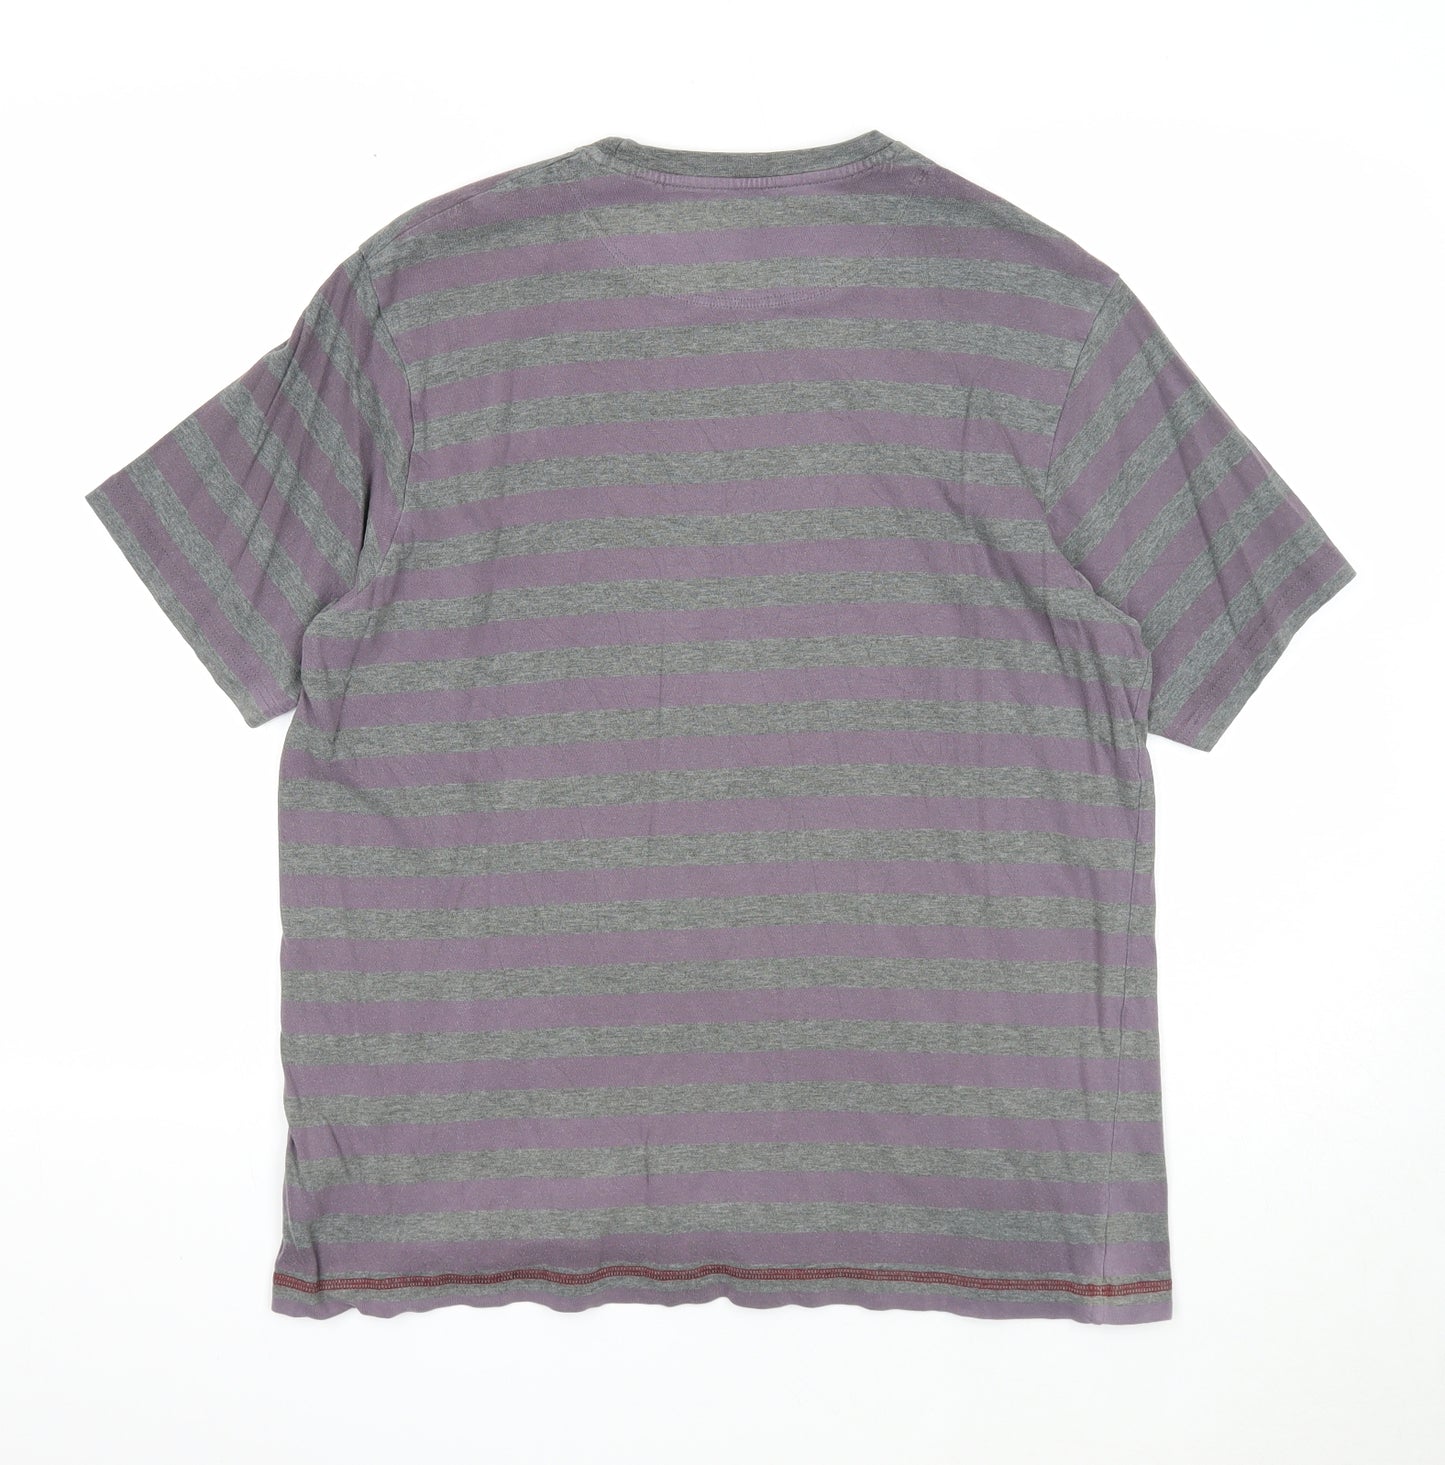 Maine New England Mens Grey Striped Cotton T-Shirt Size M Round Neck